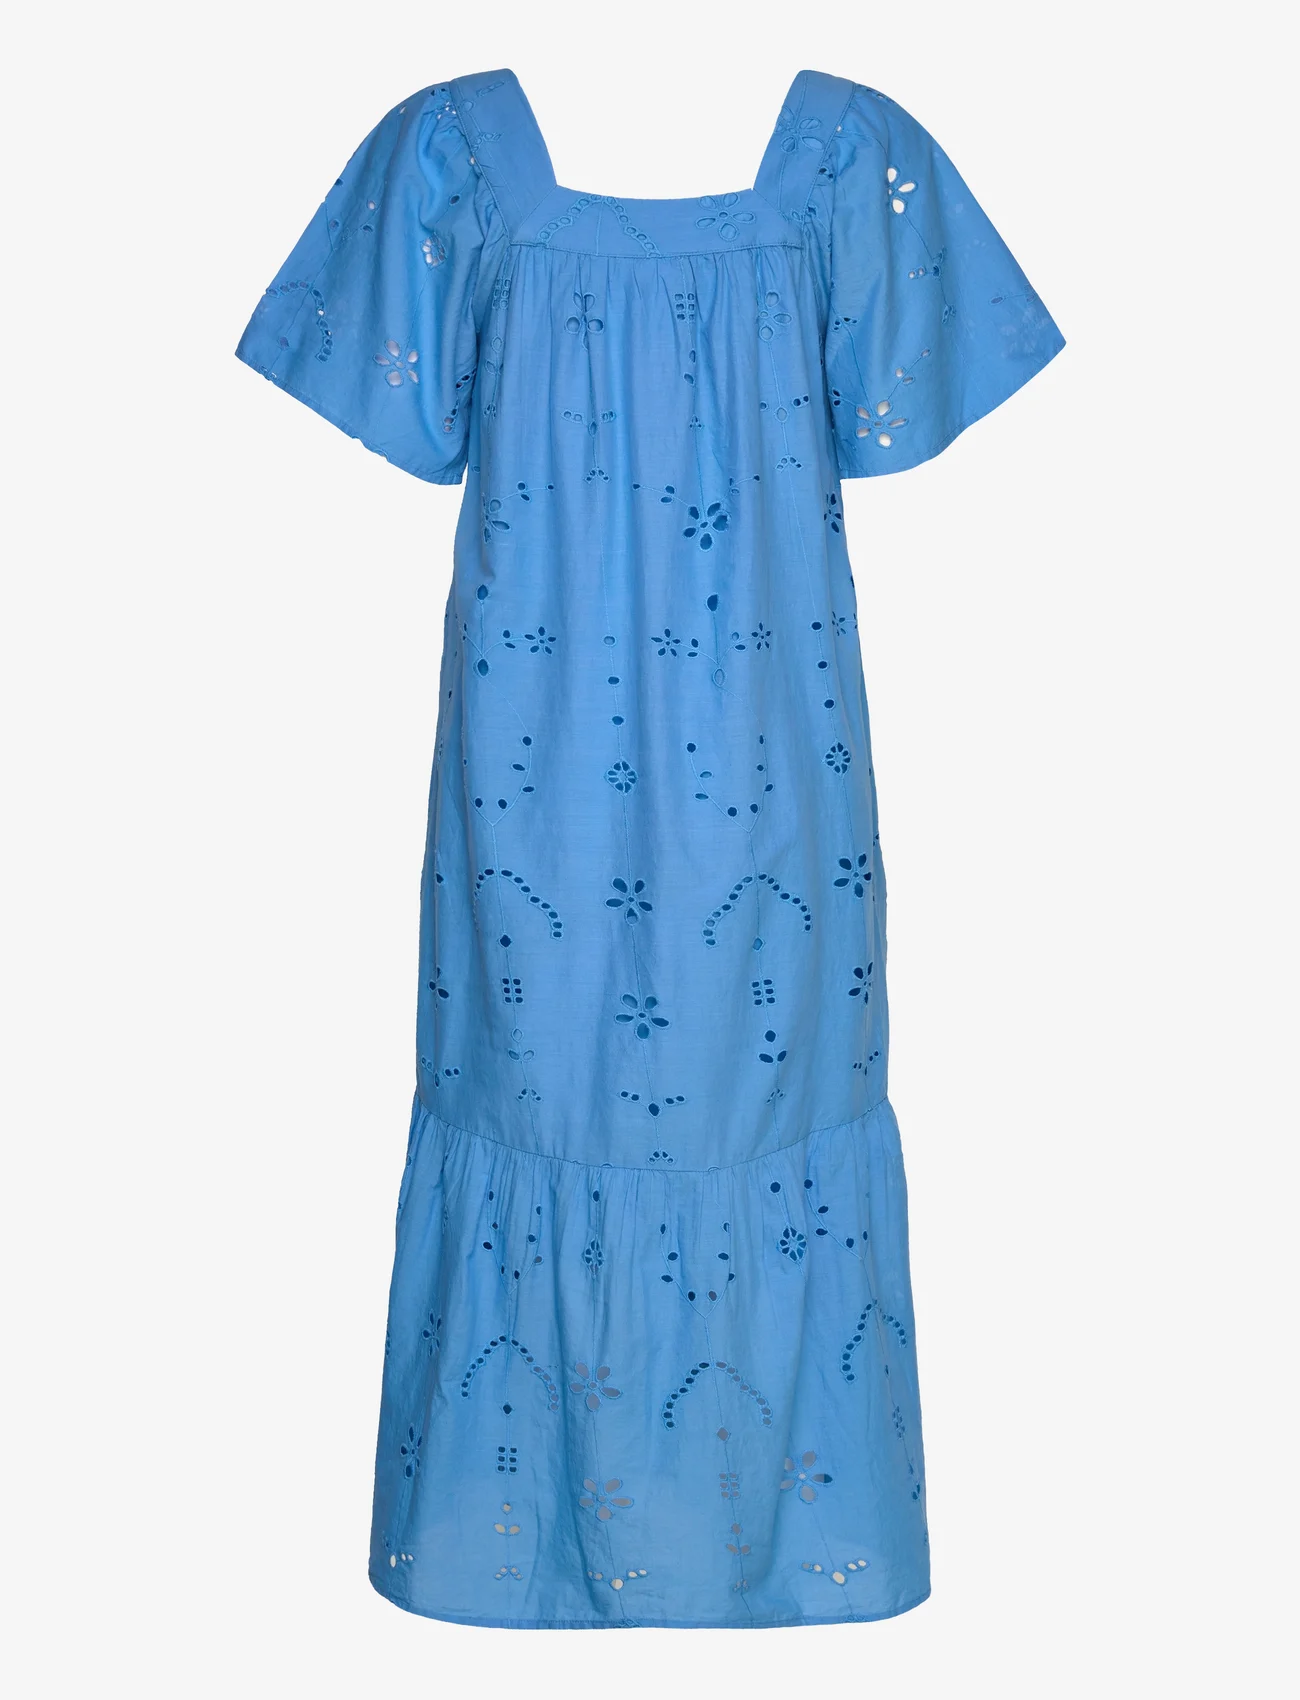 Saint Tropez - MellaniSZ Dress - azure blue - 1